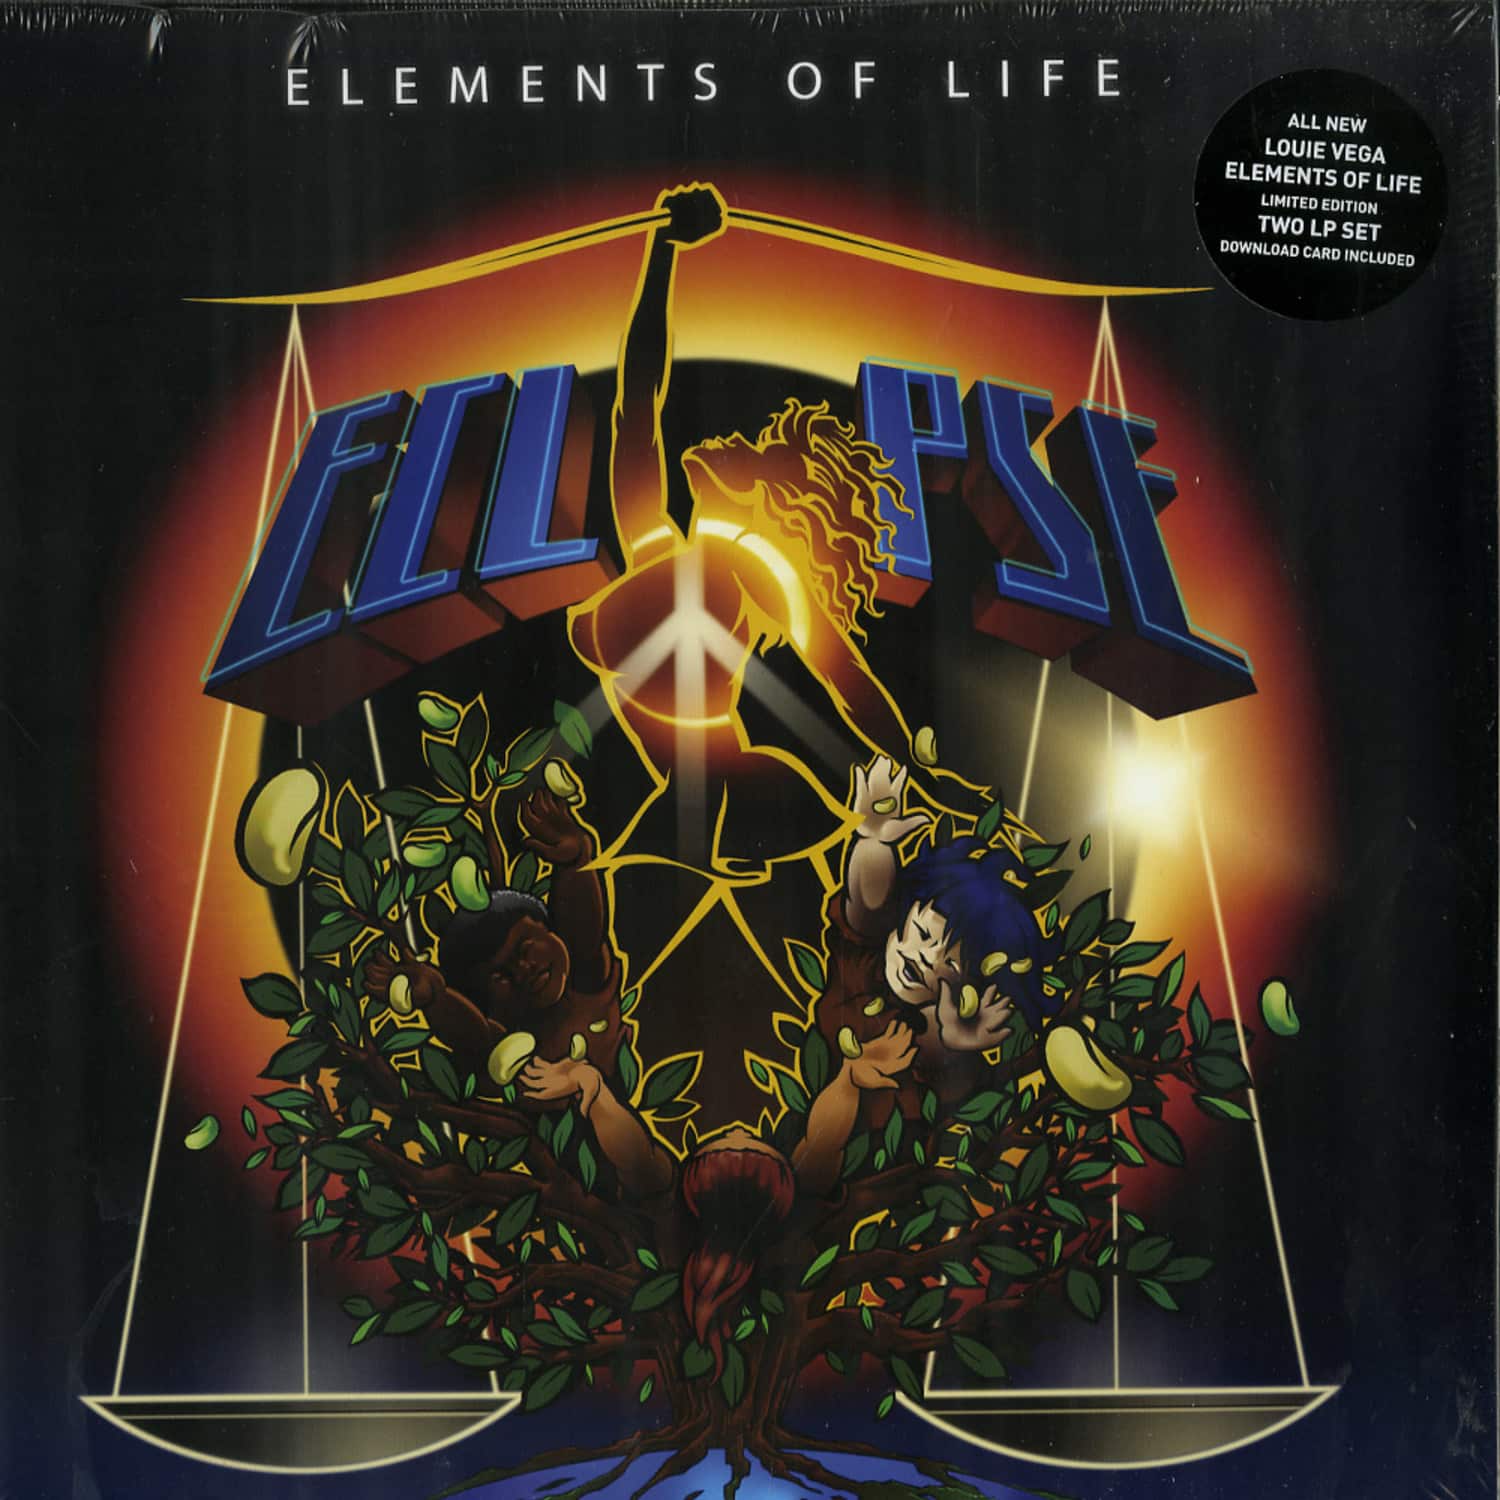 Louie Vega & Elements Of Life - ECLIPSE 